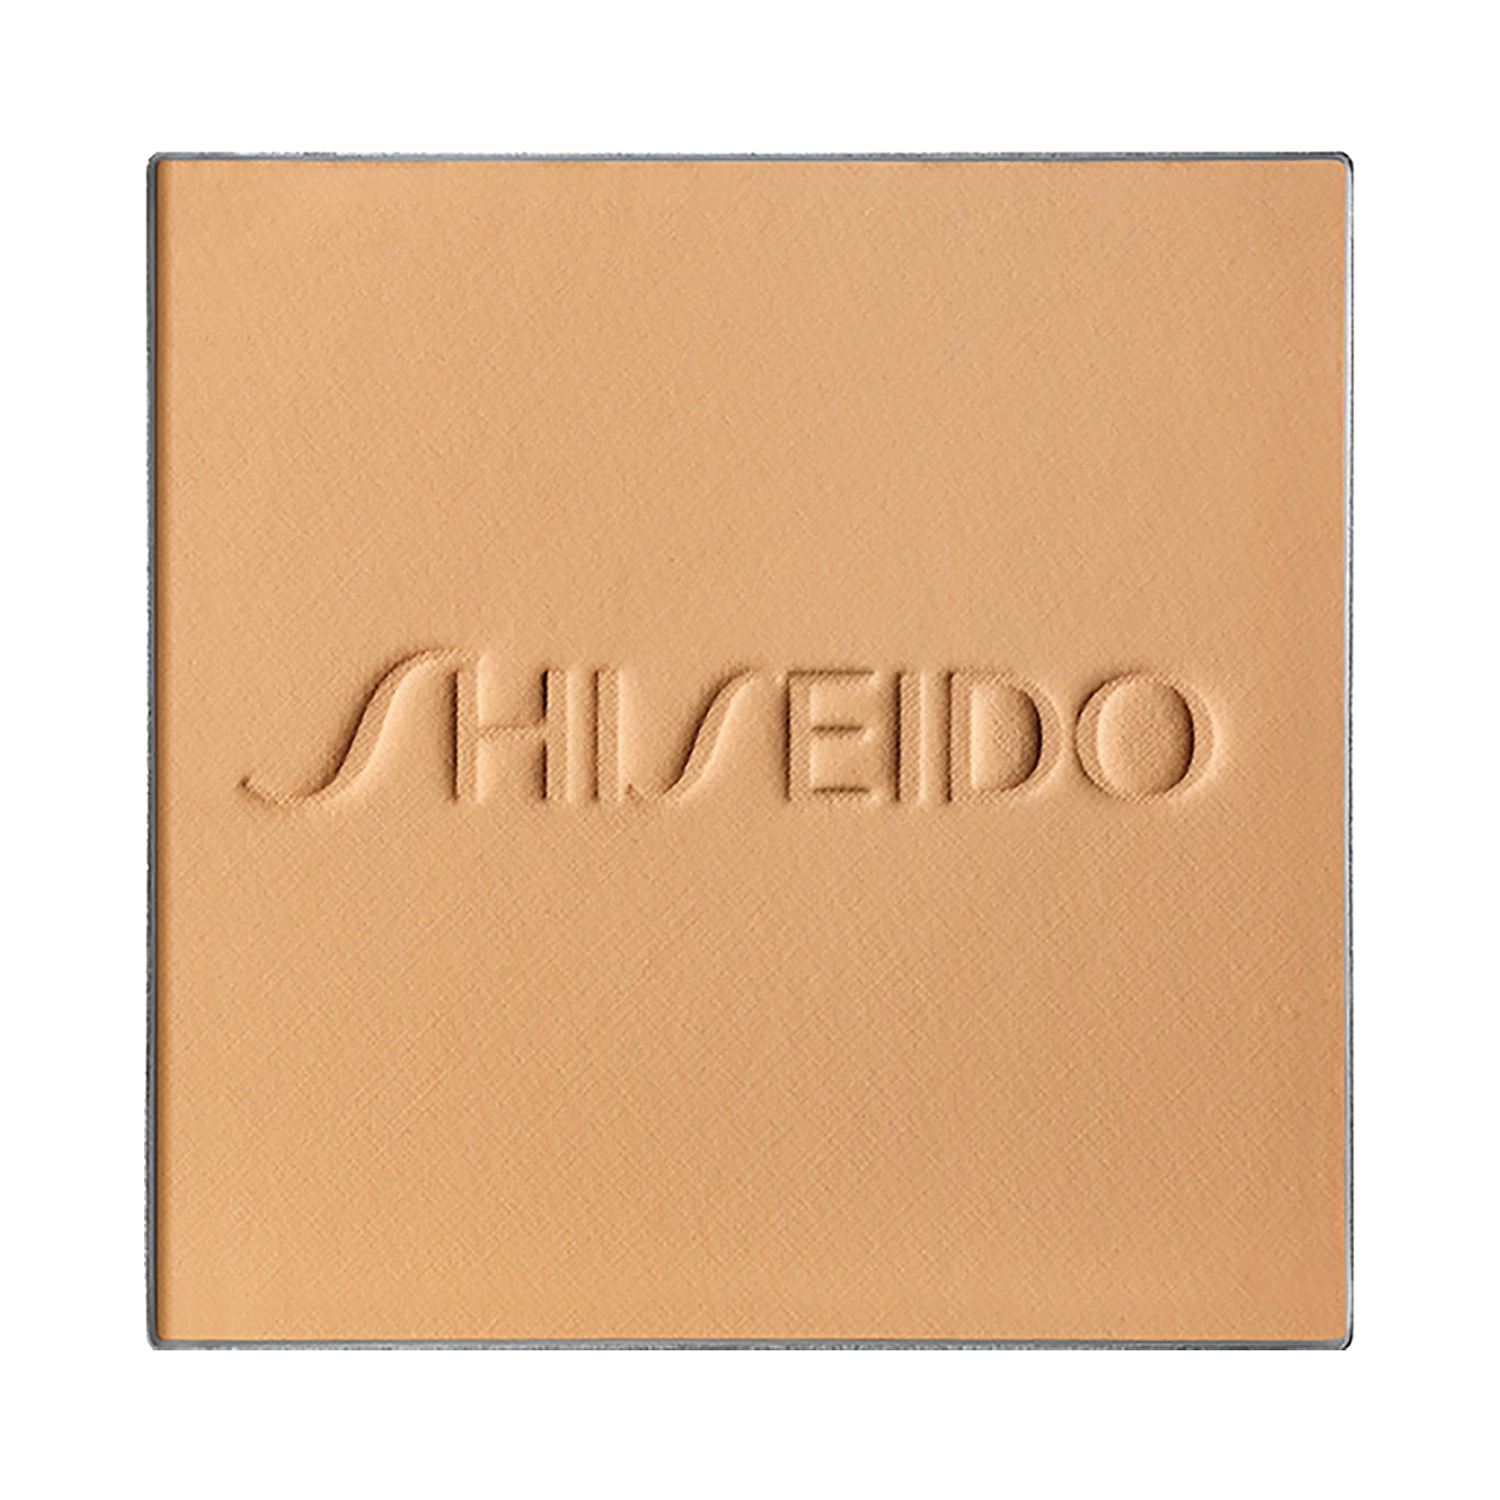 Shiseido Synchro Skin Self Refreshing Custom Finish Powder Foundation - 220 Linen (2.5g)